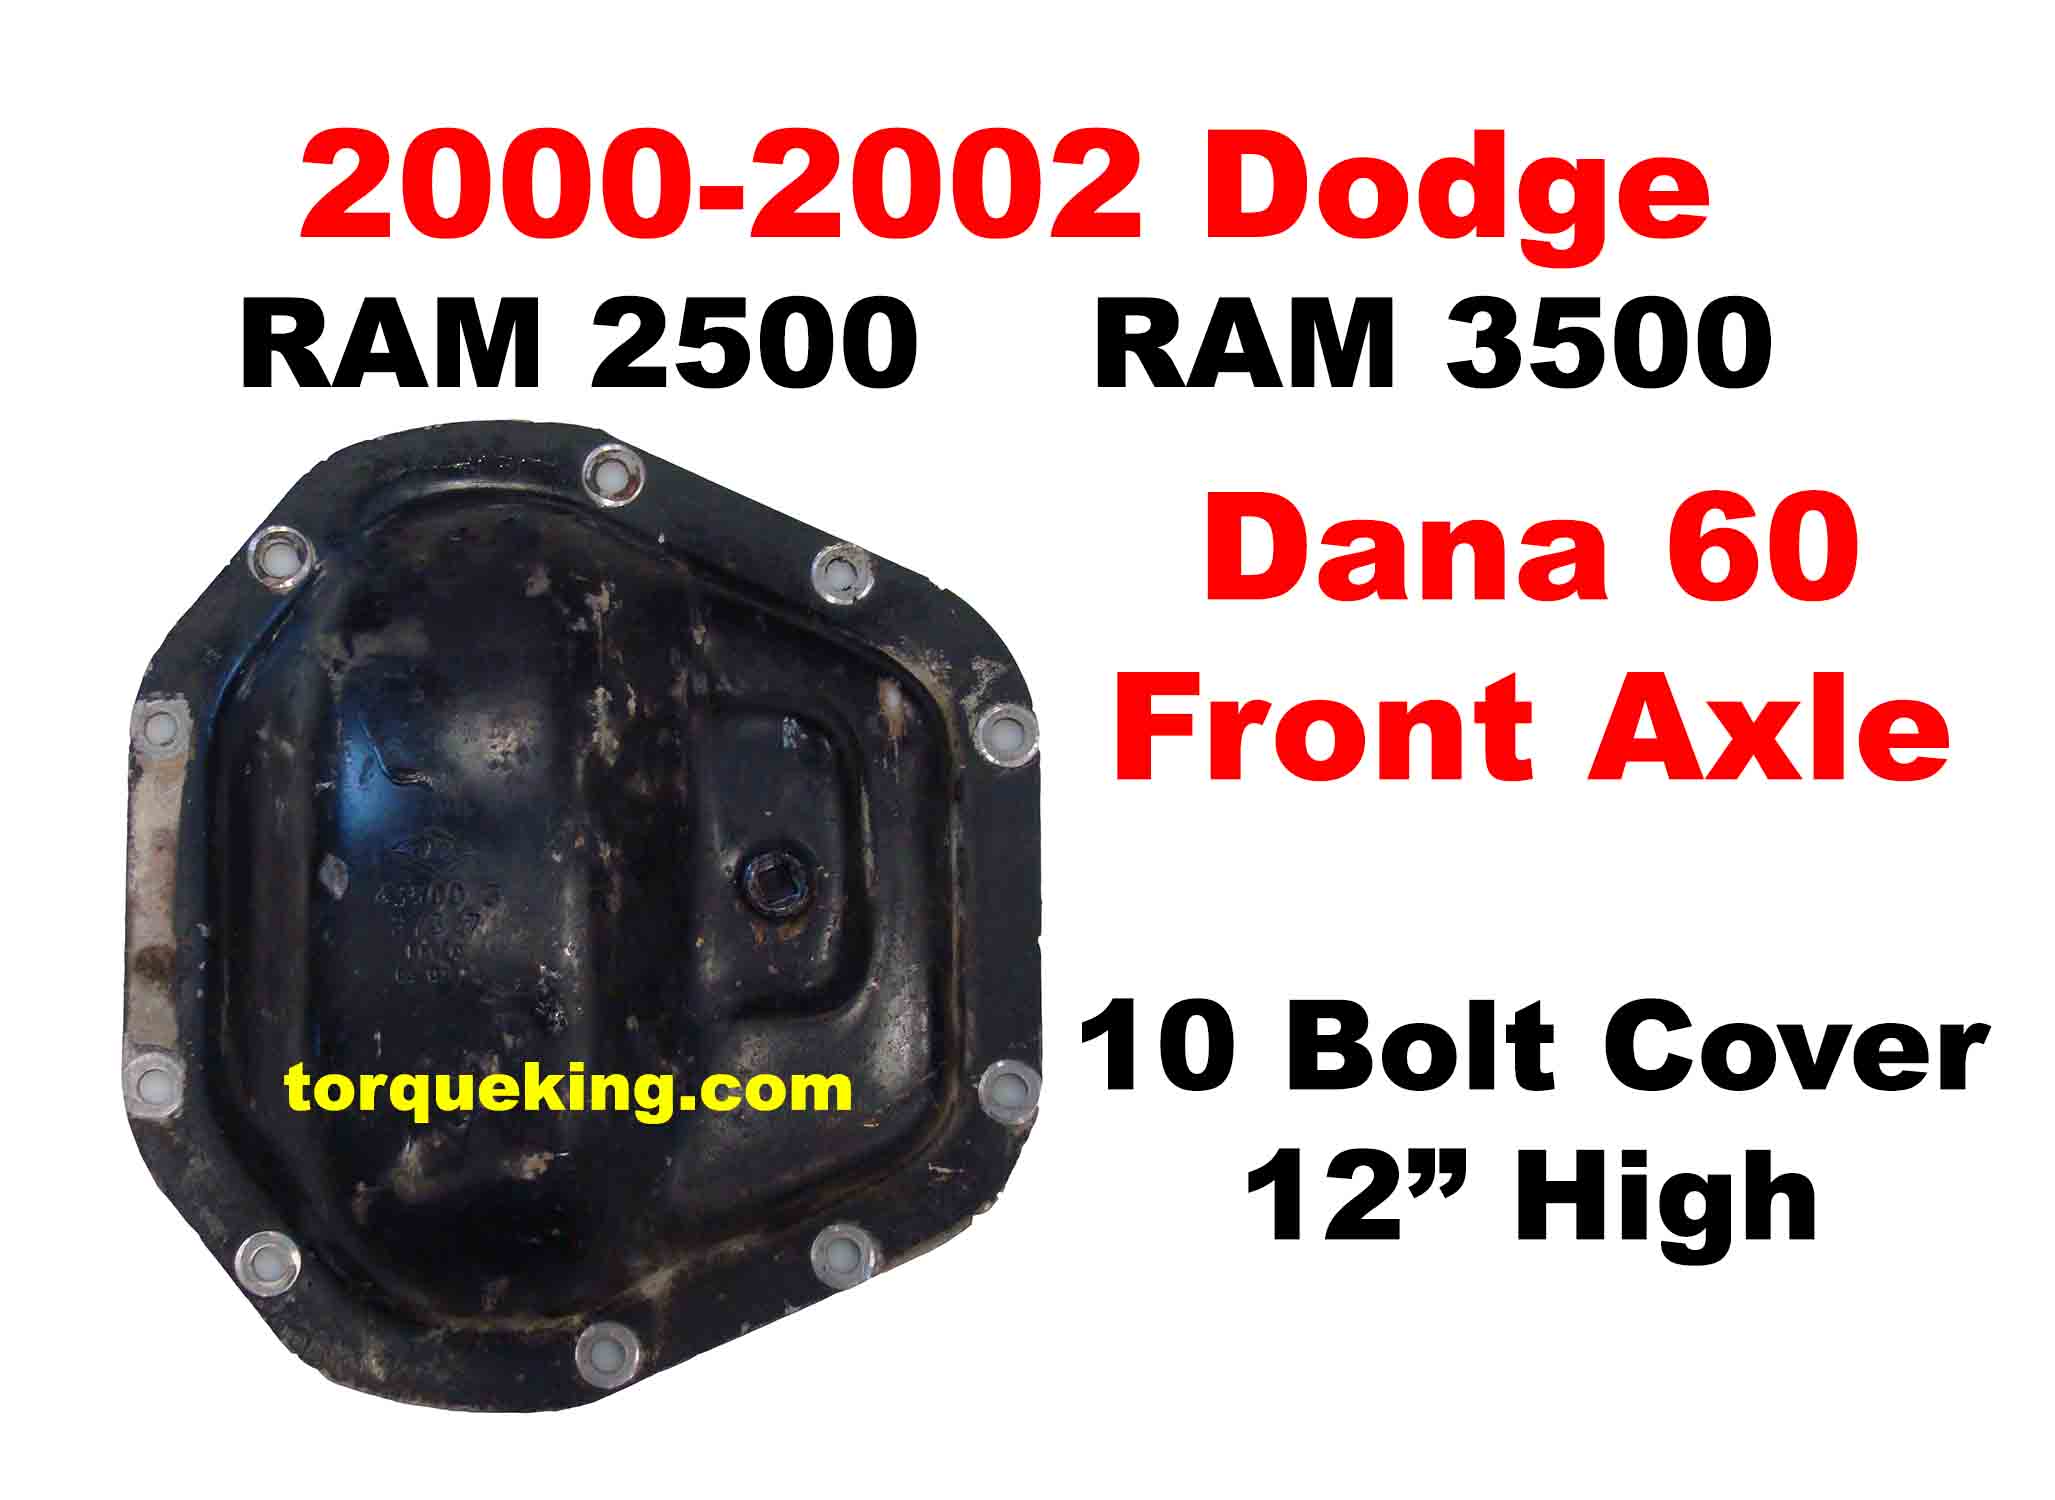 2000-2002-dodge-ram-dana-60-axle-cover.jpg